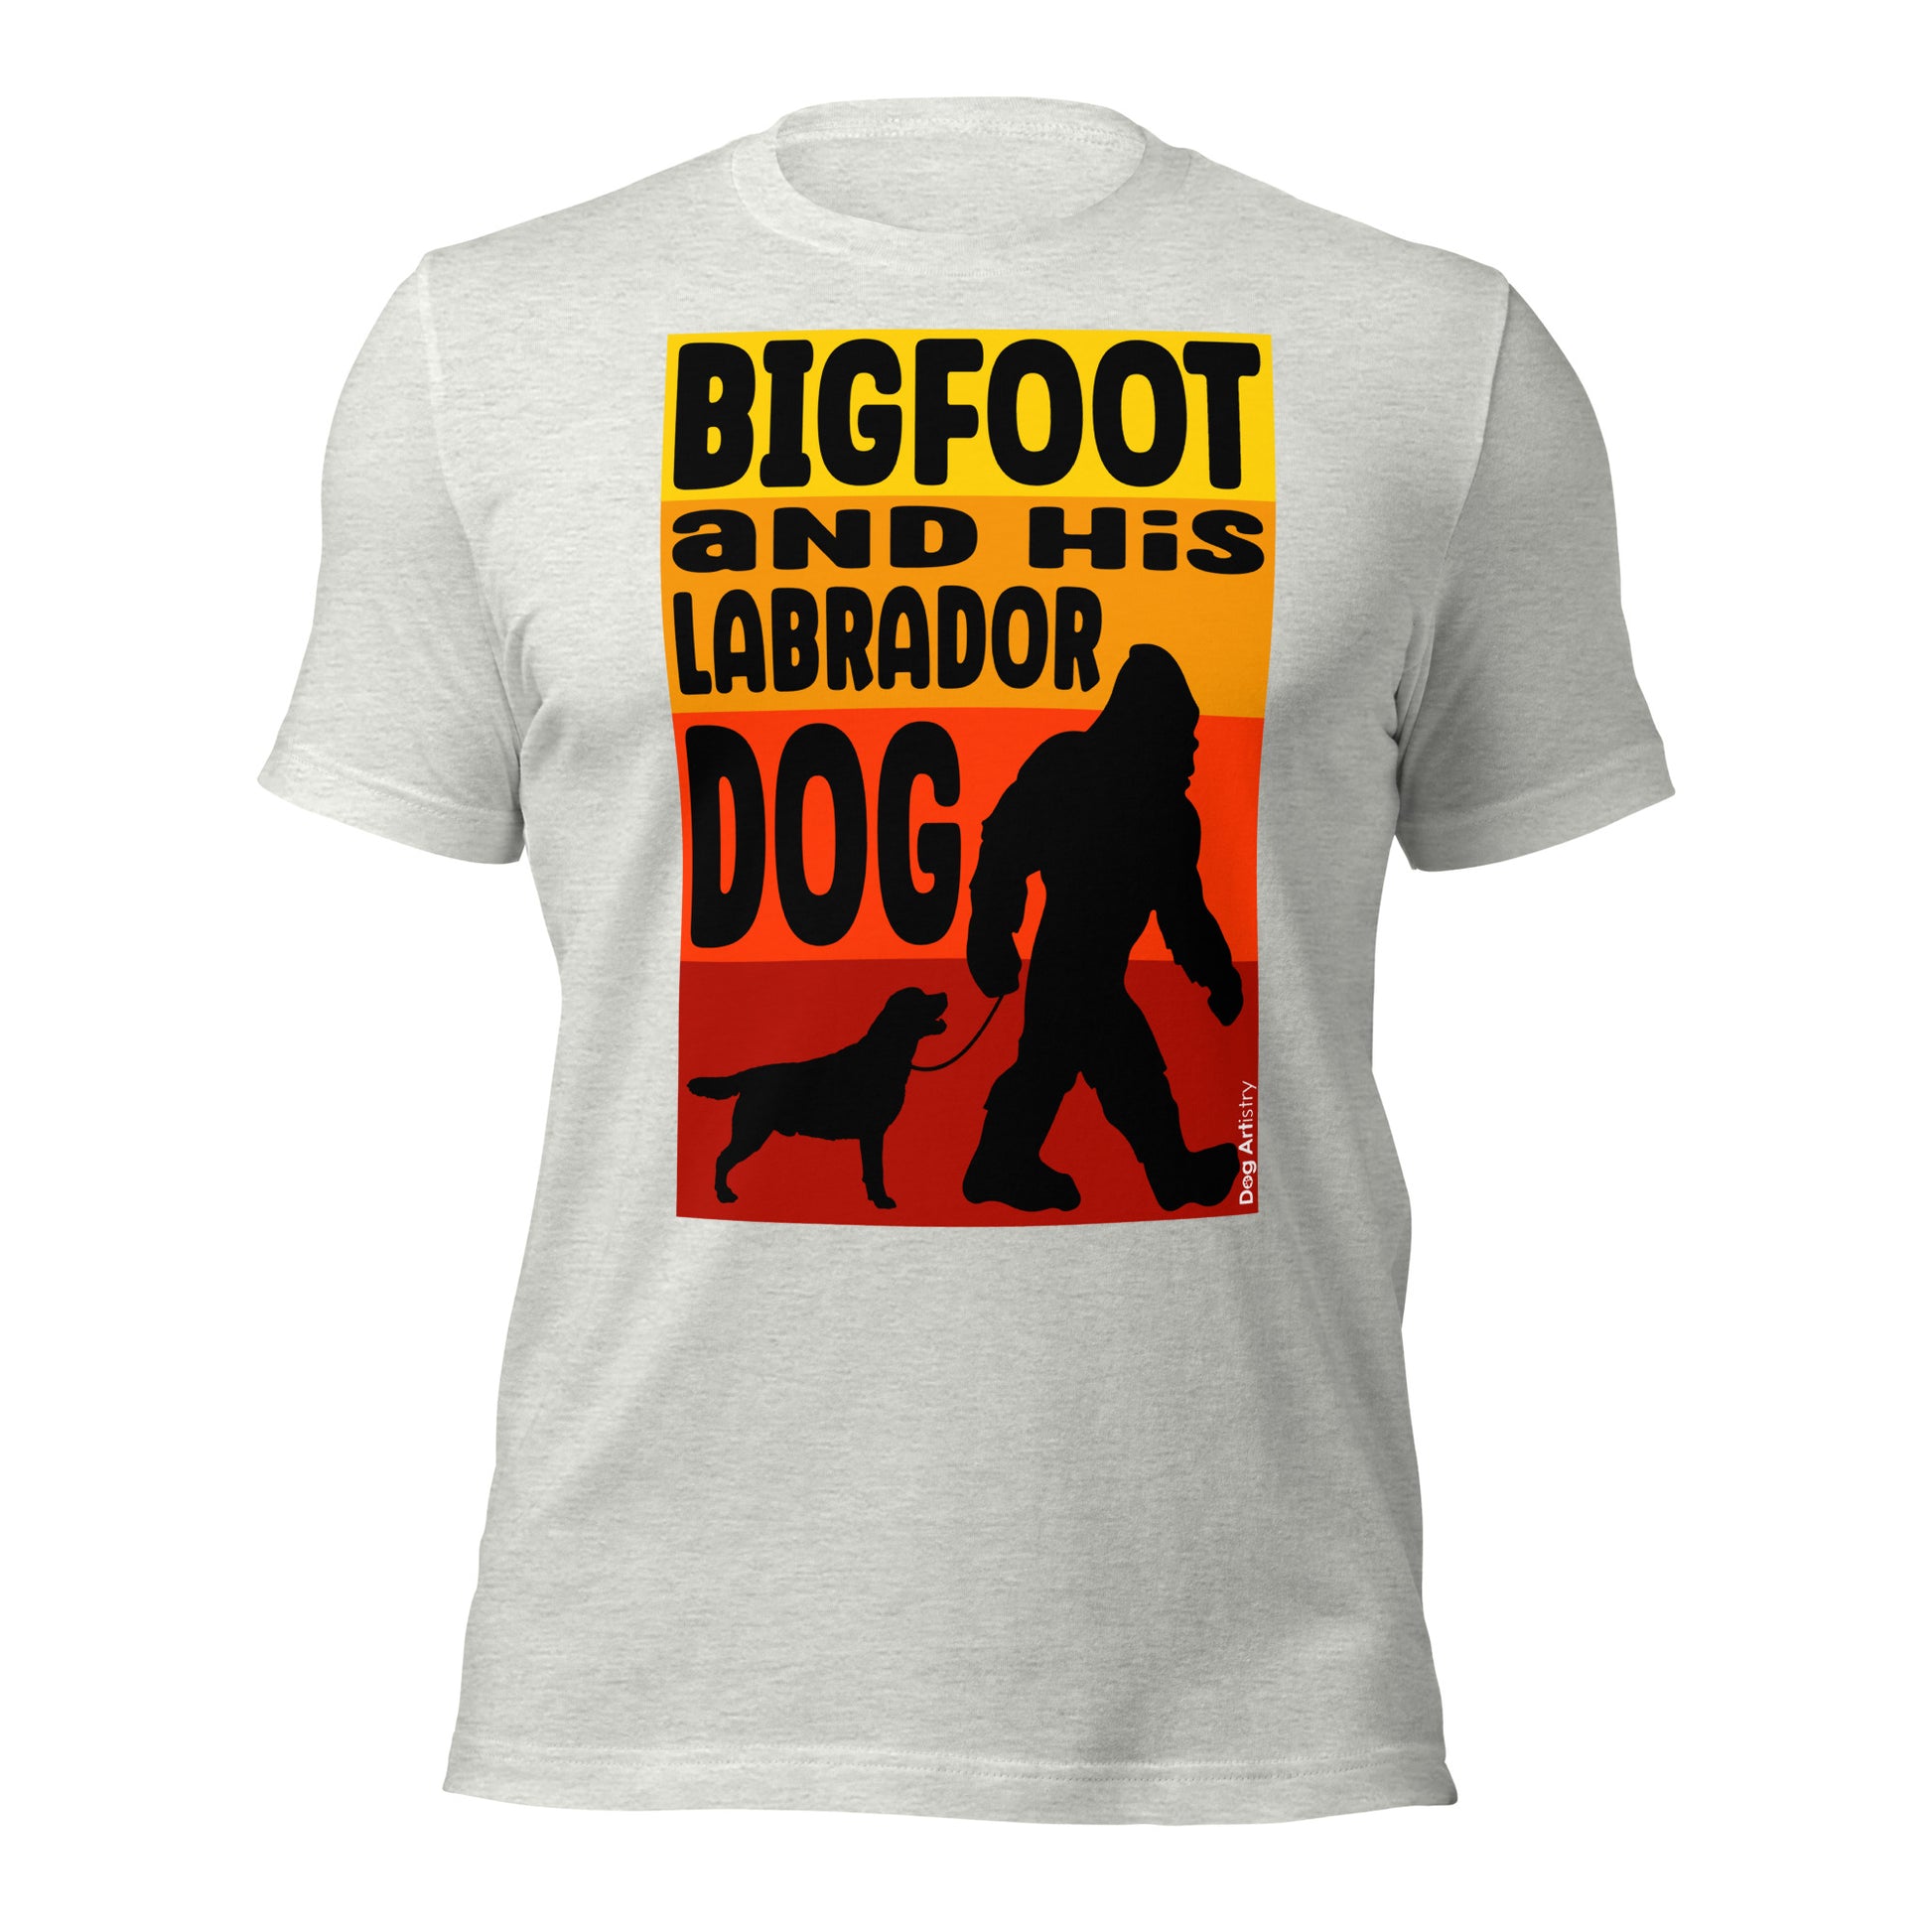 Bigfoot and his labrador retriever unisex ash t-shirt by Dog Artistry.